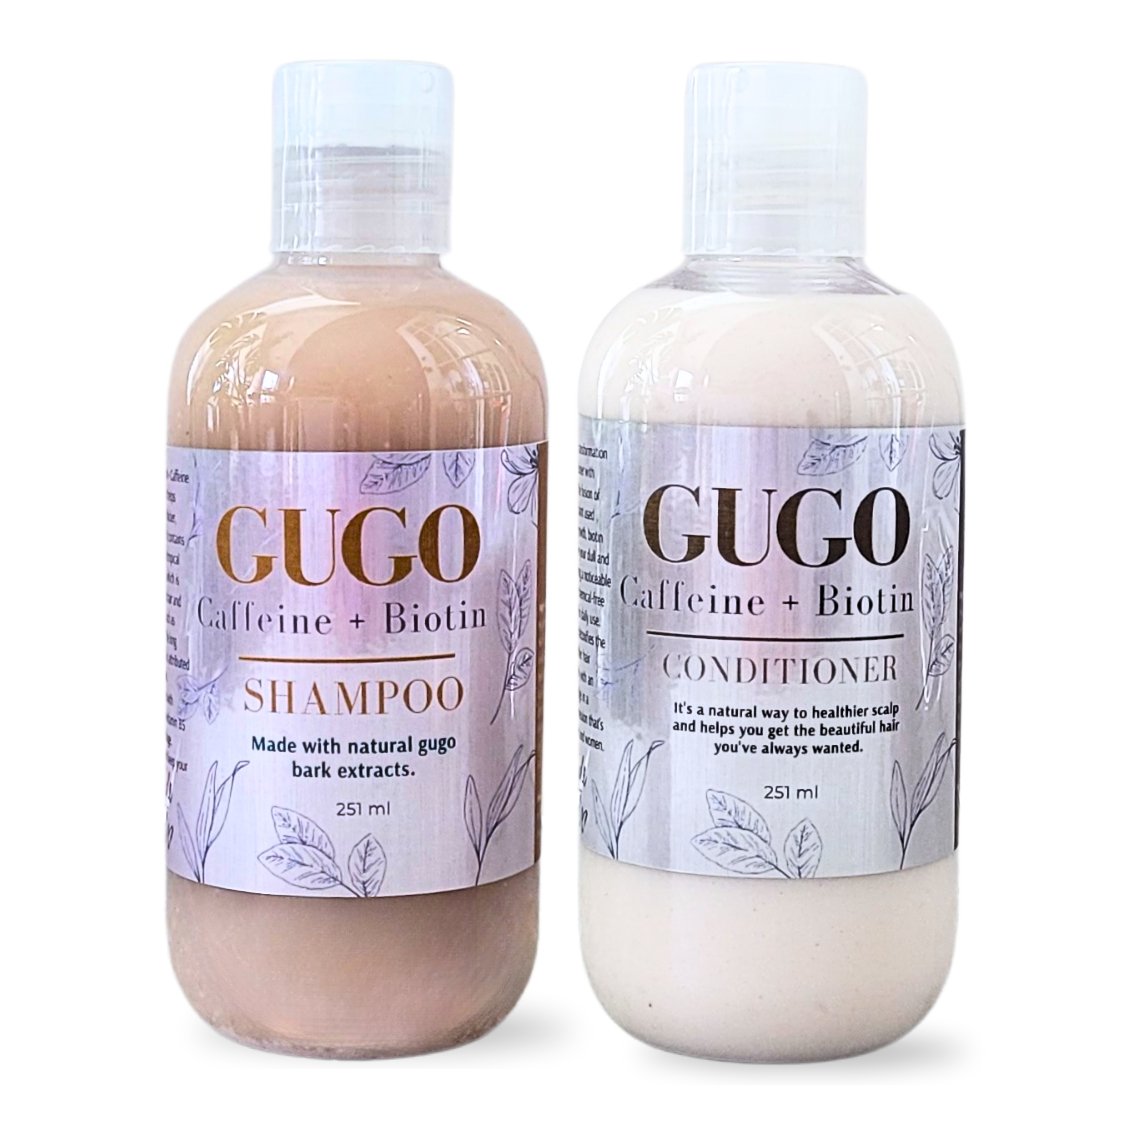 Gugo Shampoo with Biotin + Caffeine - Nature Skin Shop